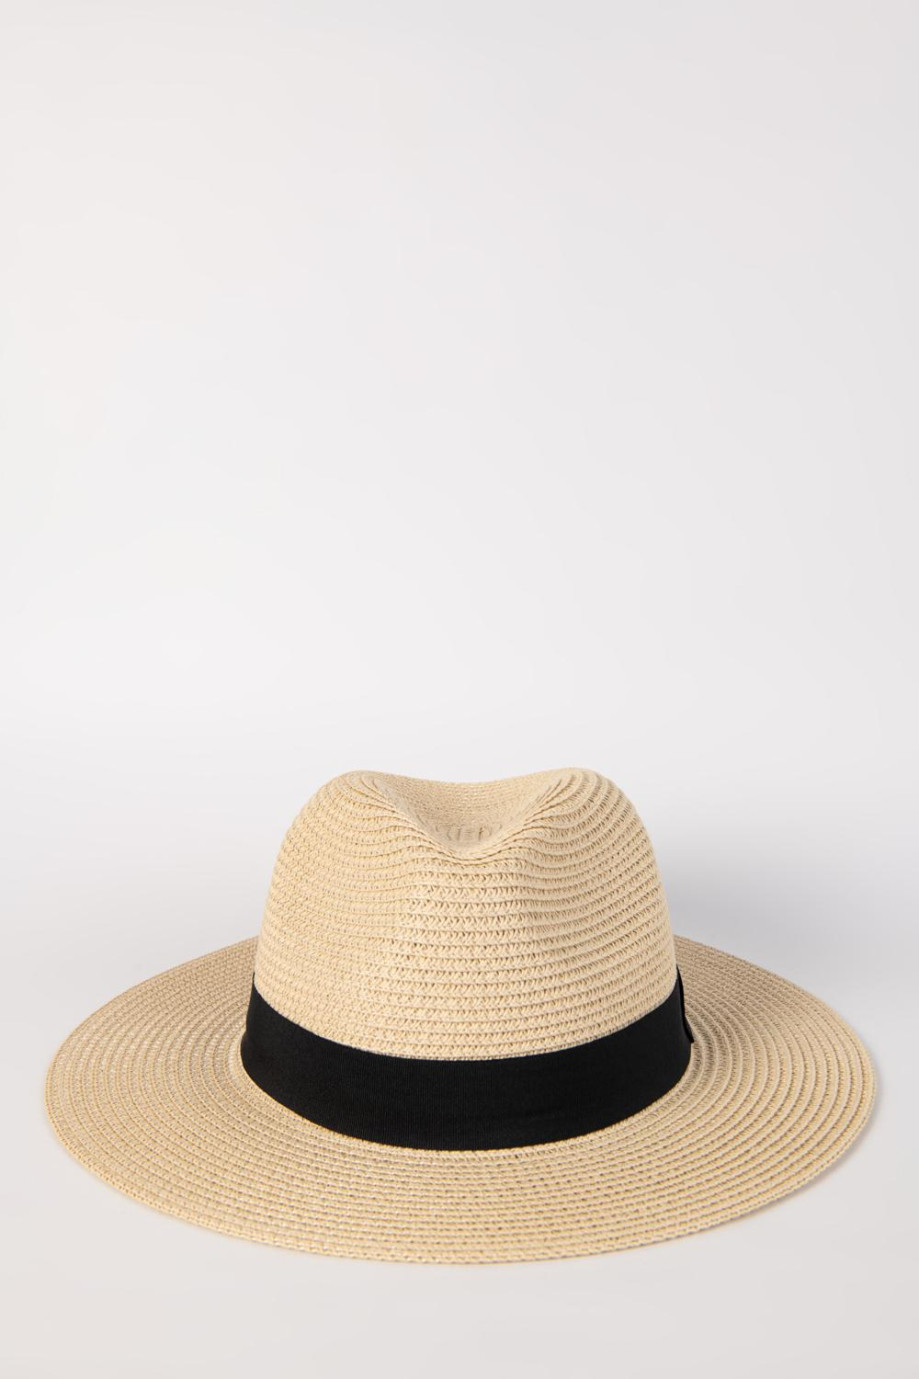 Sombrero Panamá crema claro con cinta negra decorativa